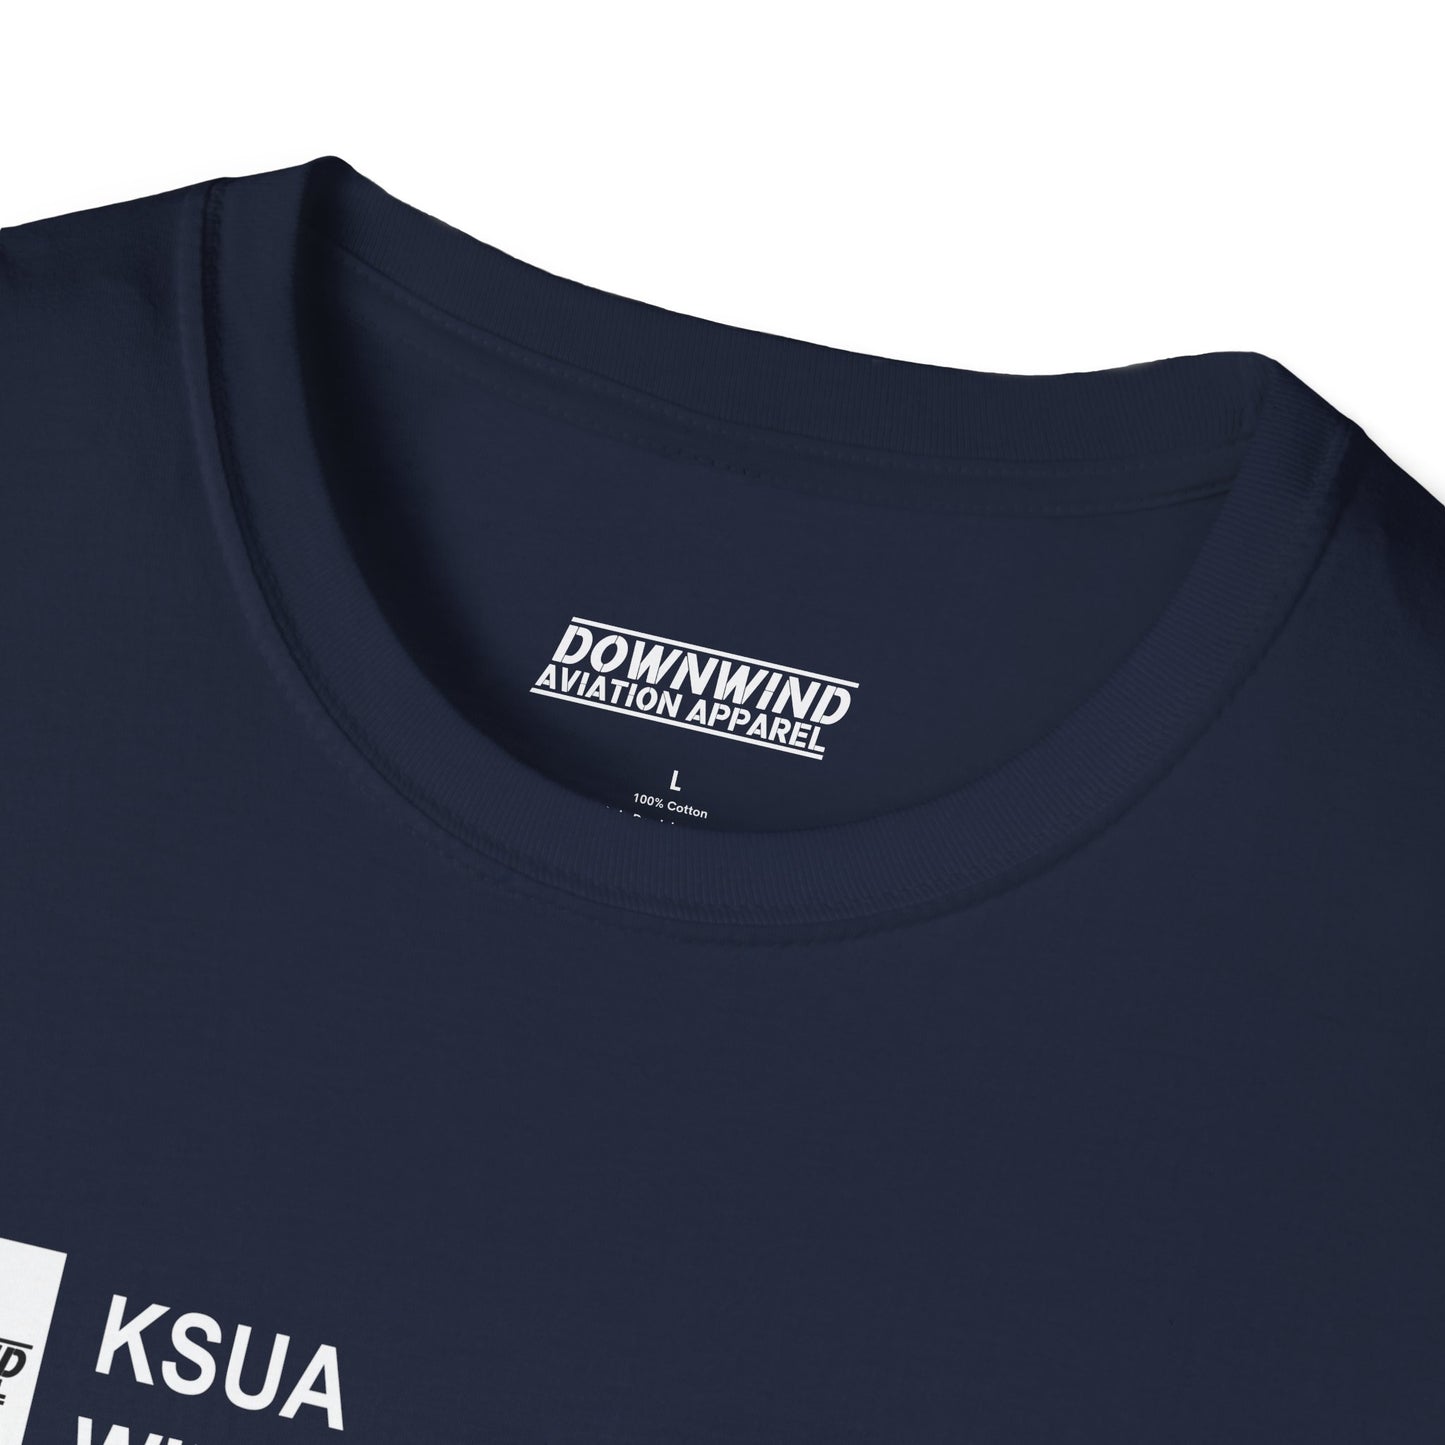 KSUA / Wiltham Field Airport T-Shirt